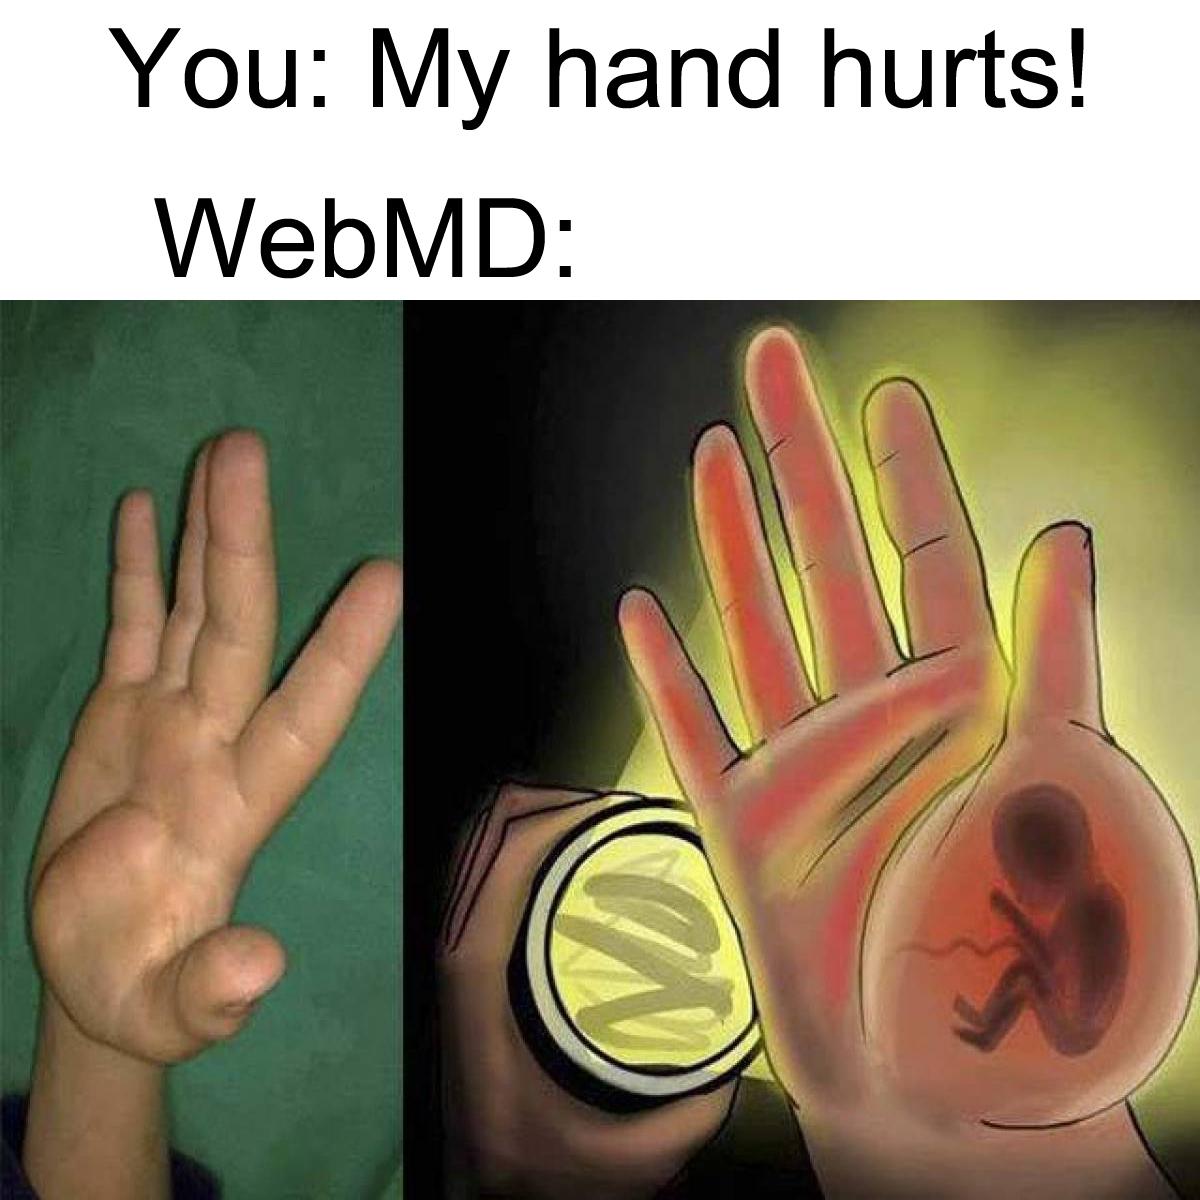 dank memes - funny memes - web 2.0 - You My hand hurts! WebMD